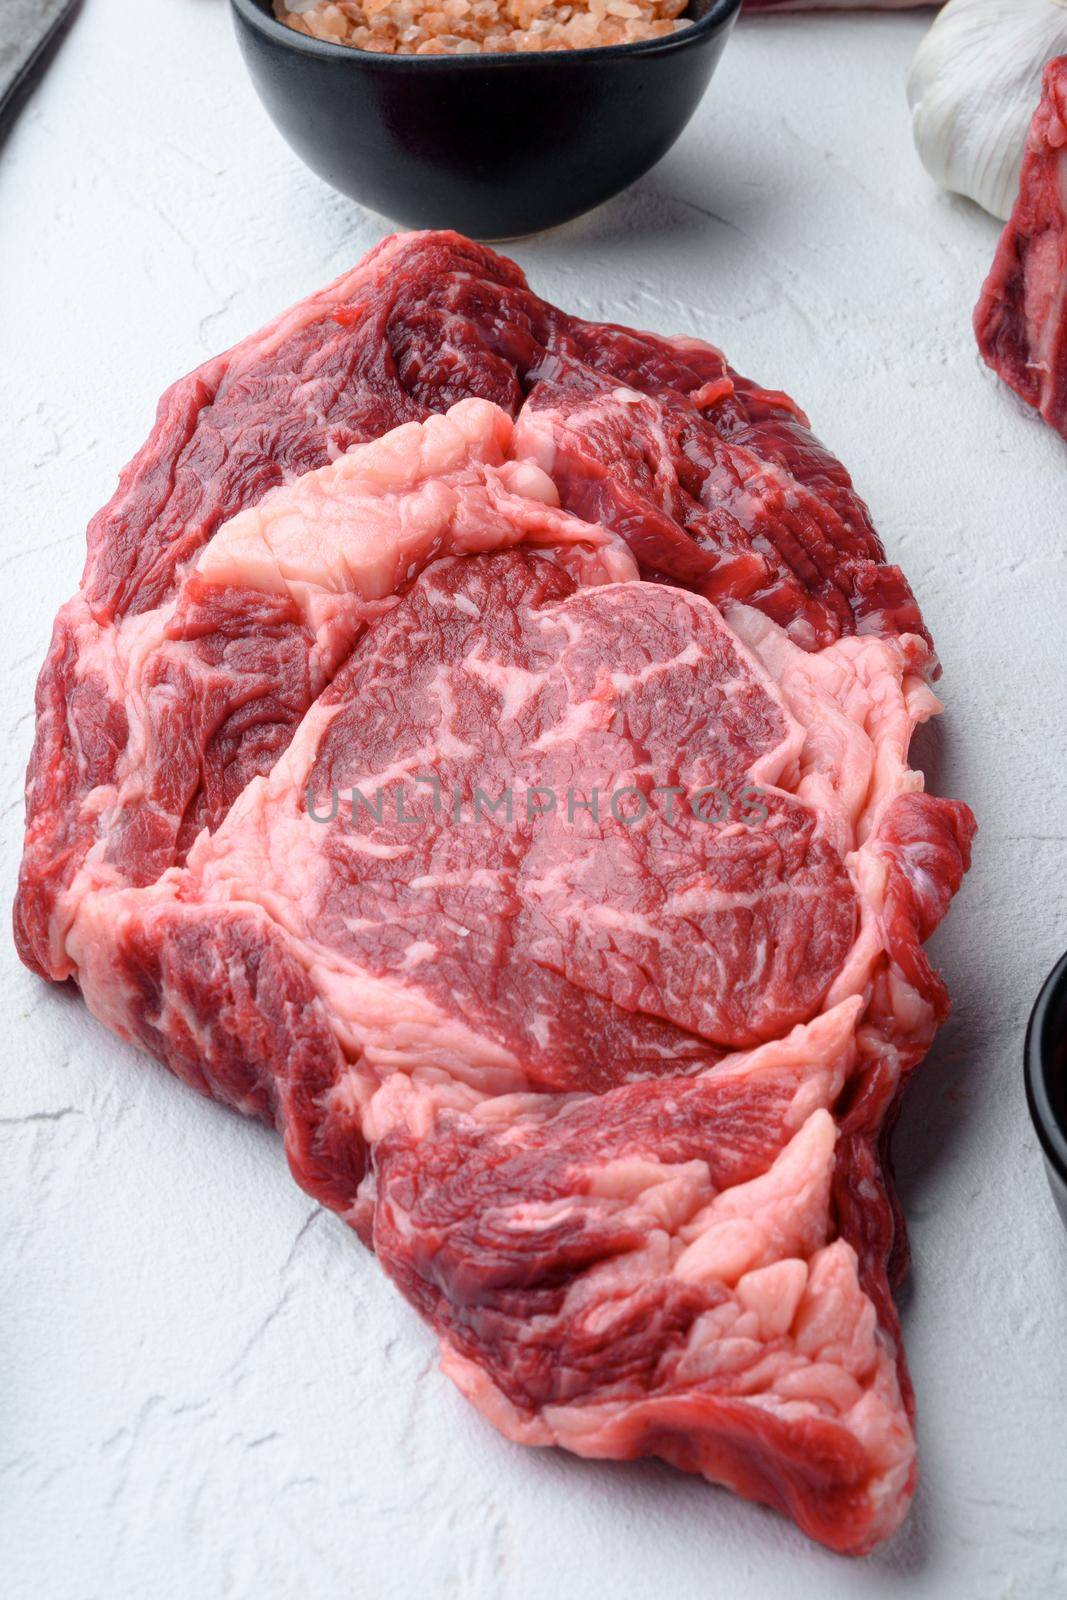 Raw fresh marbled meat Steak Ribeye Black Angus, on white stone background, top view flat lay by Ilianesolenyi